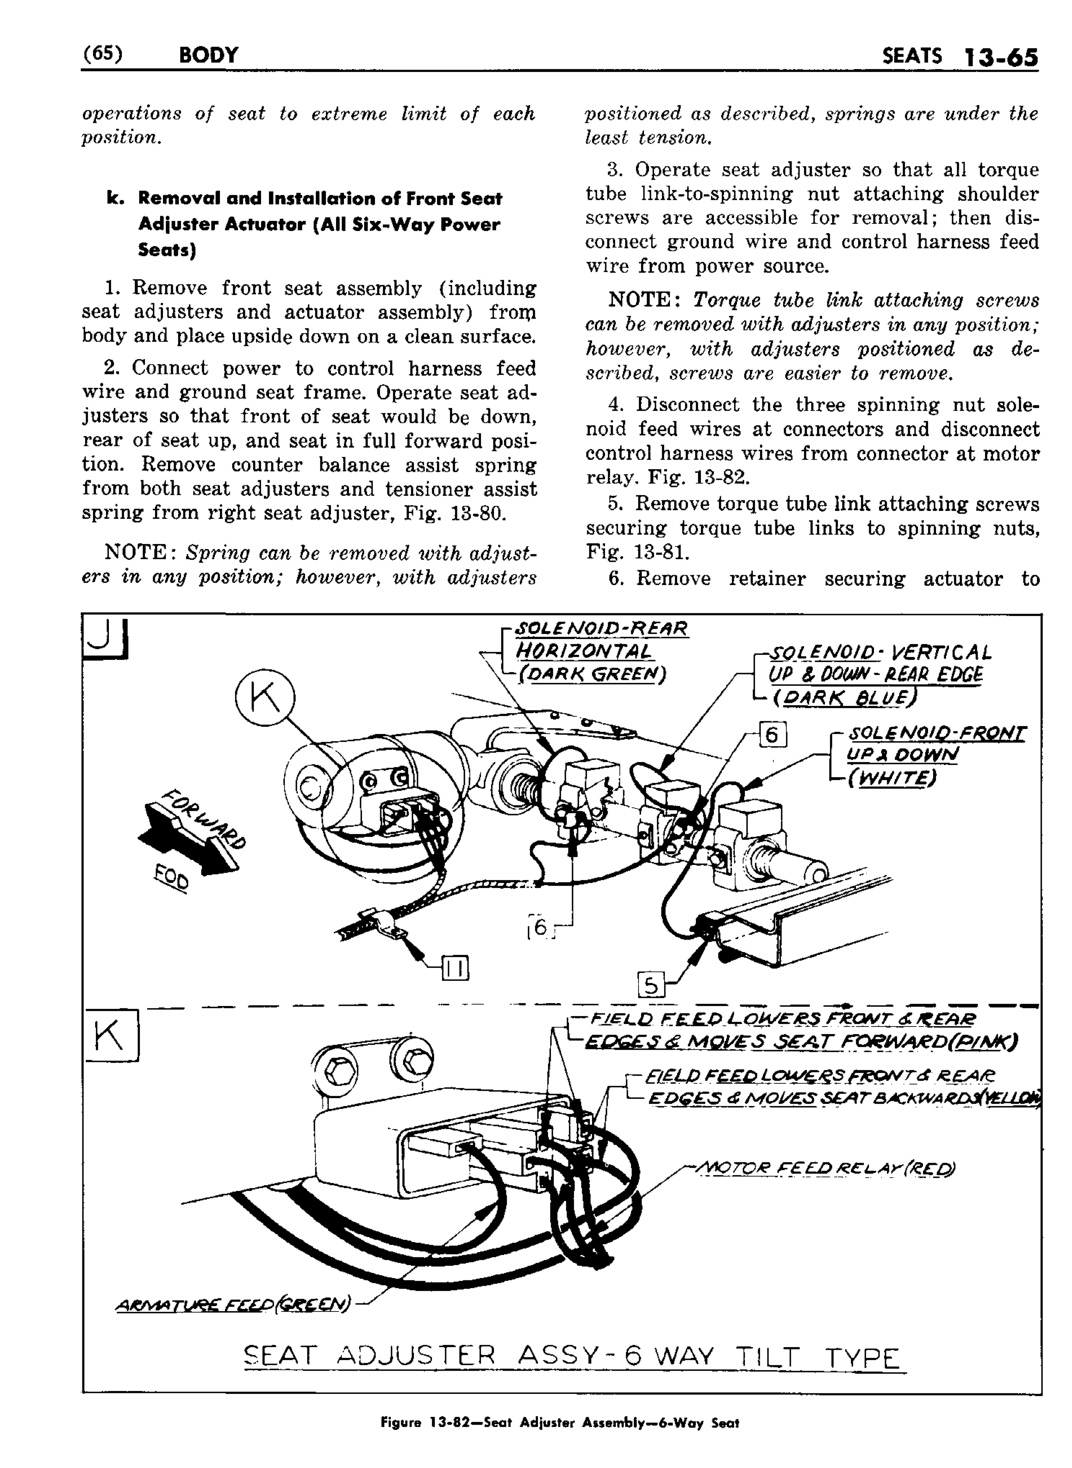 n_1958 Buick Body Service Manual-066-066.jpg